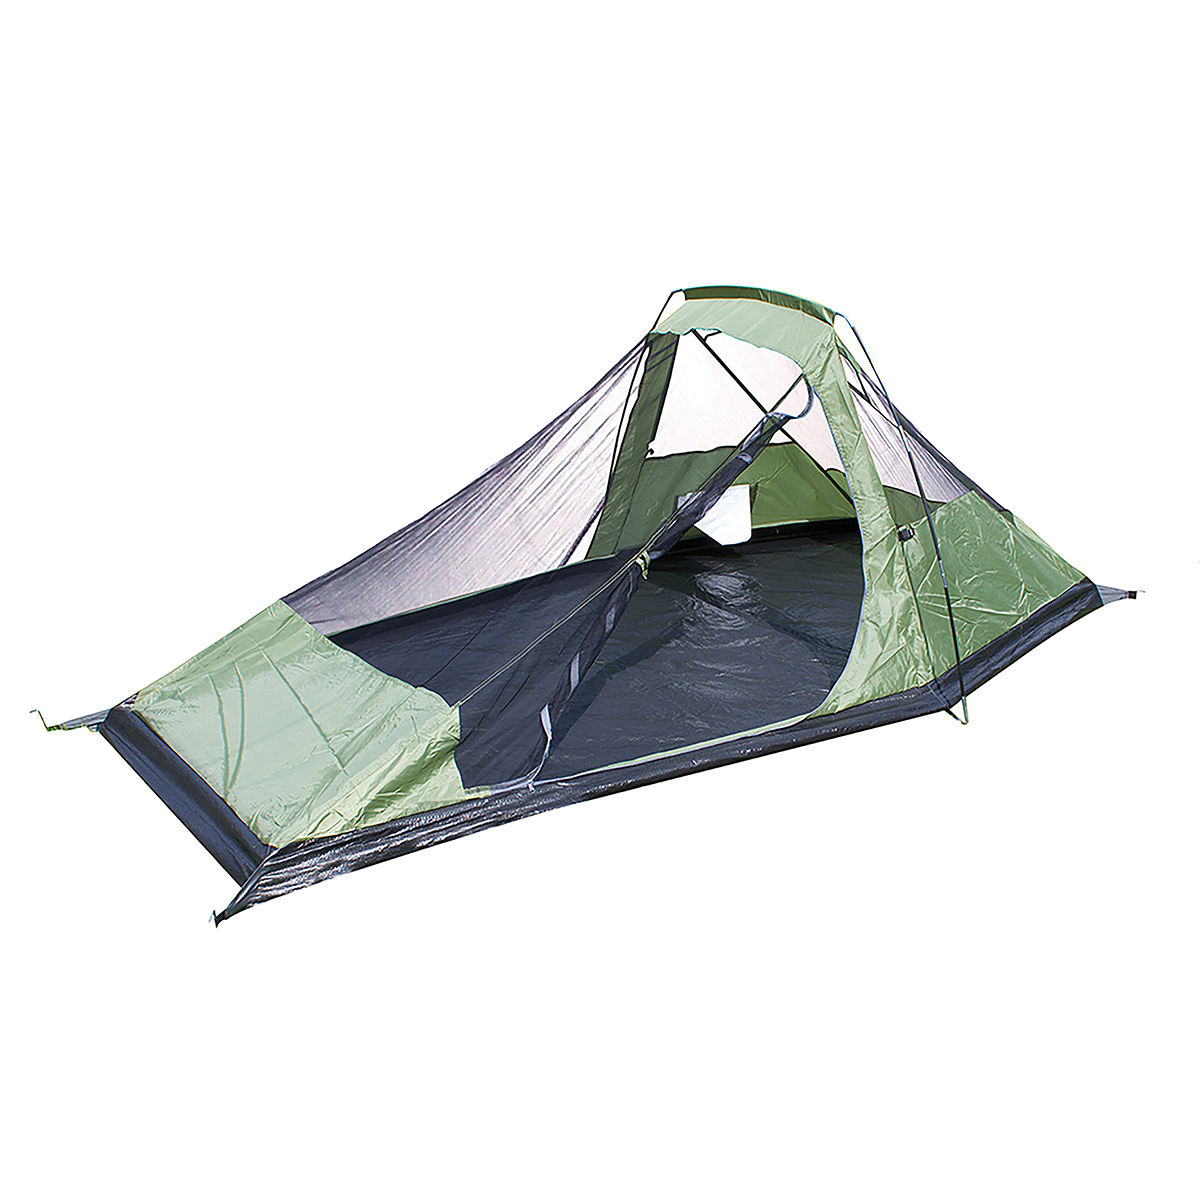 alpine design tent 2 person teal